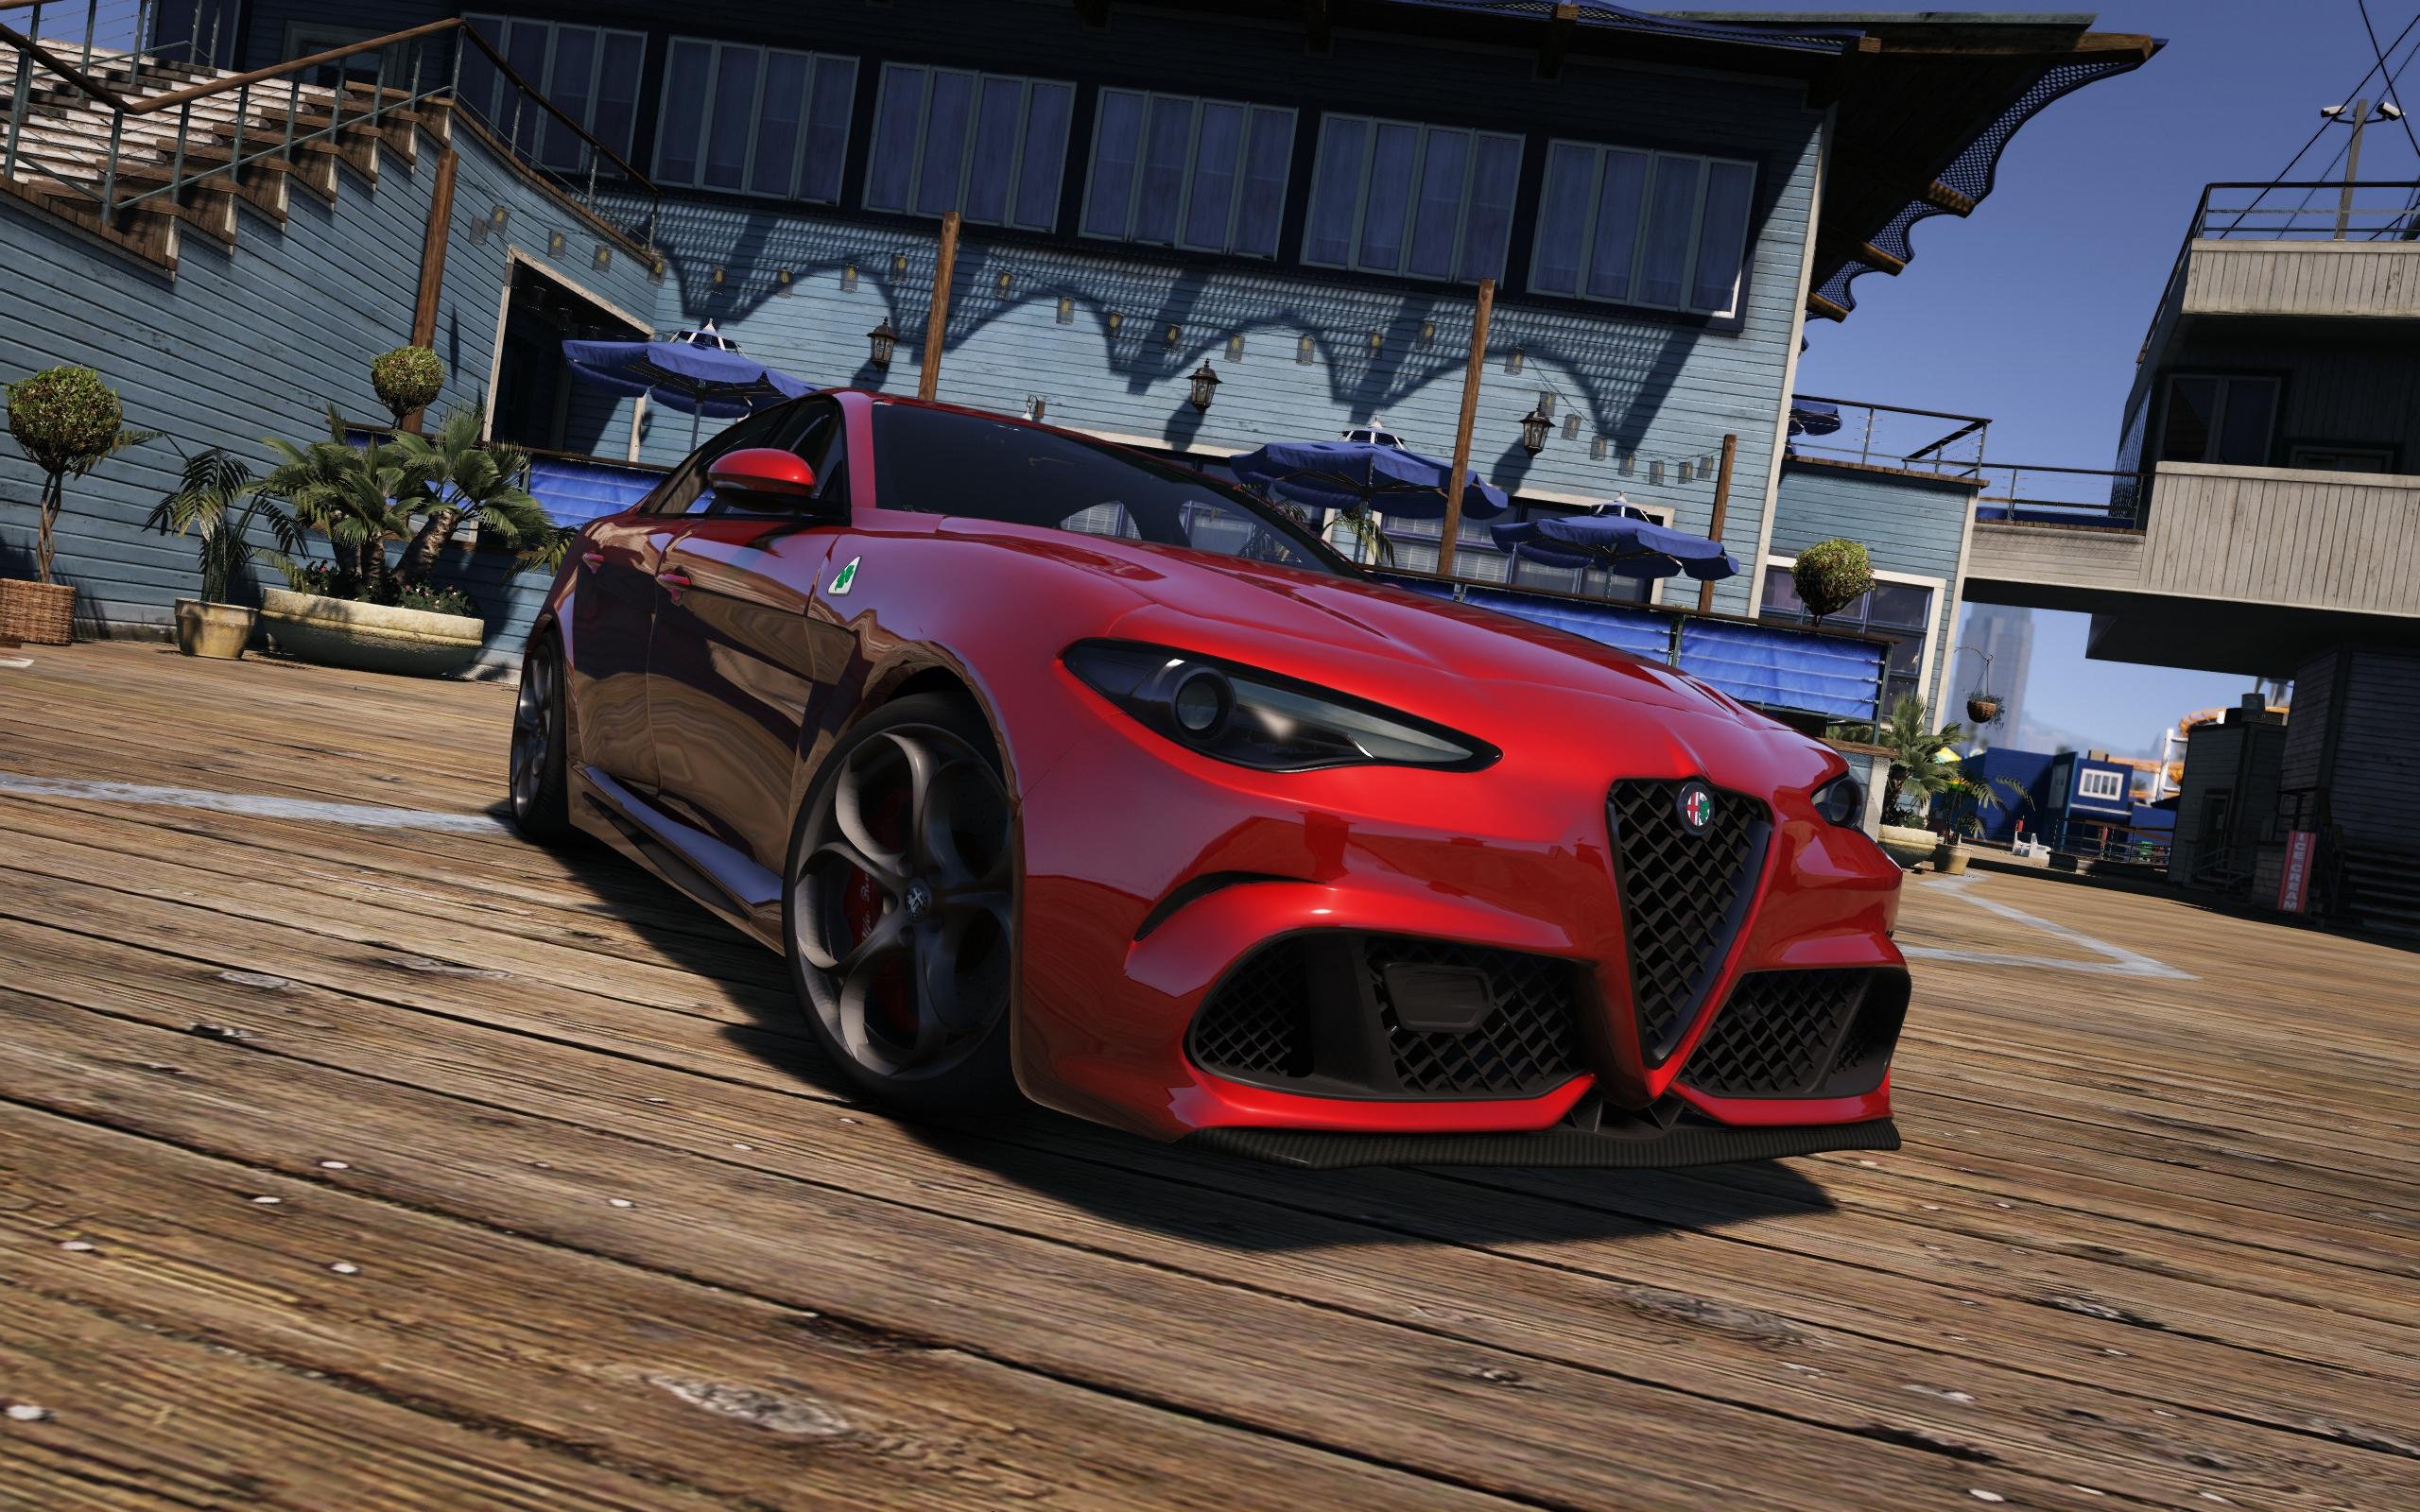 Gran Turismo 7 December Update Adds Alfa Romeo Giulia GTAm And Other Cars